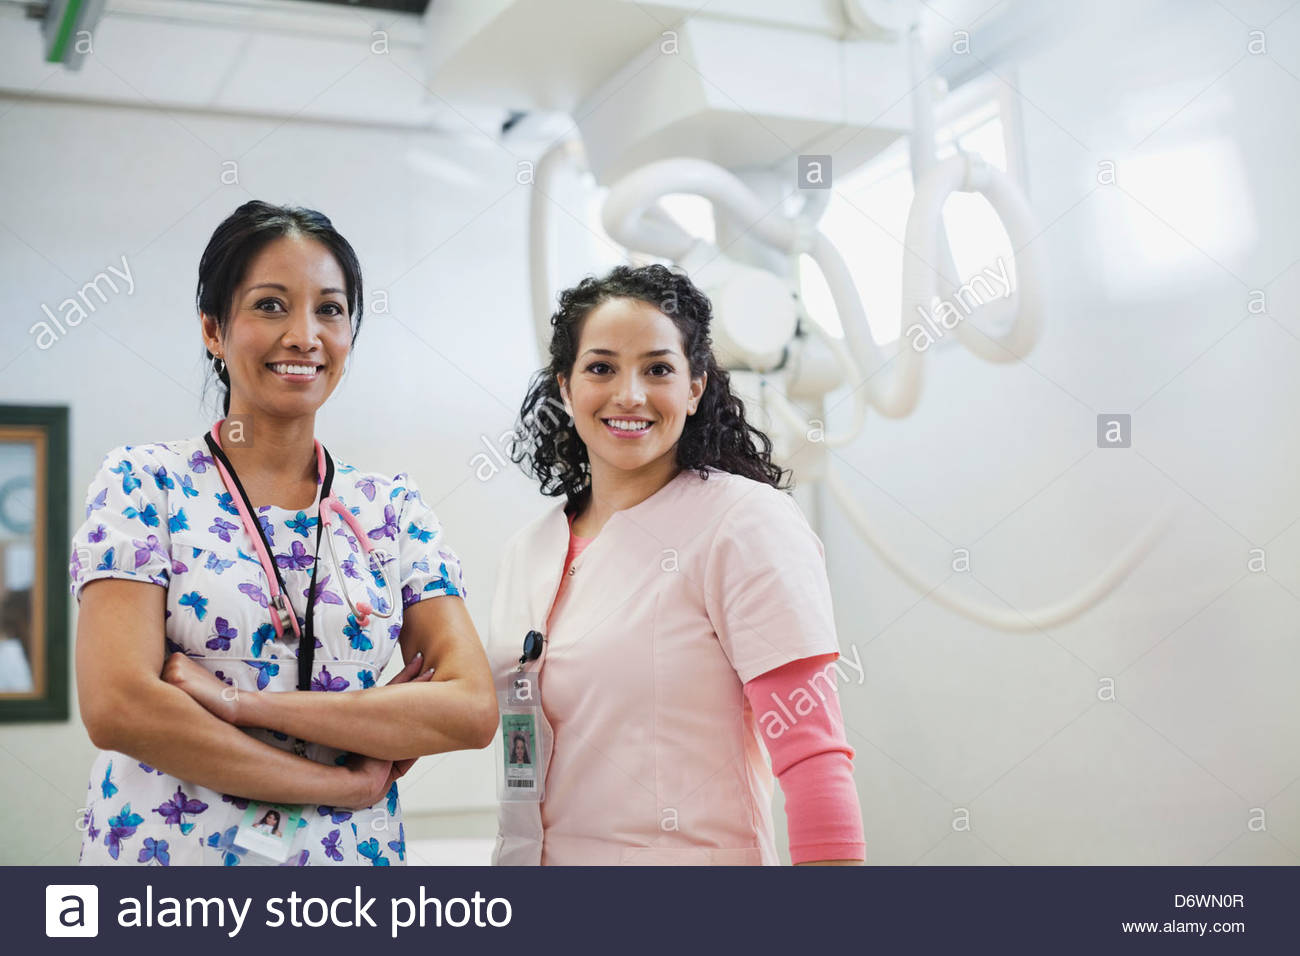 Portrait of happy female medical professionals in examination room Stock Photo